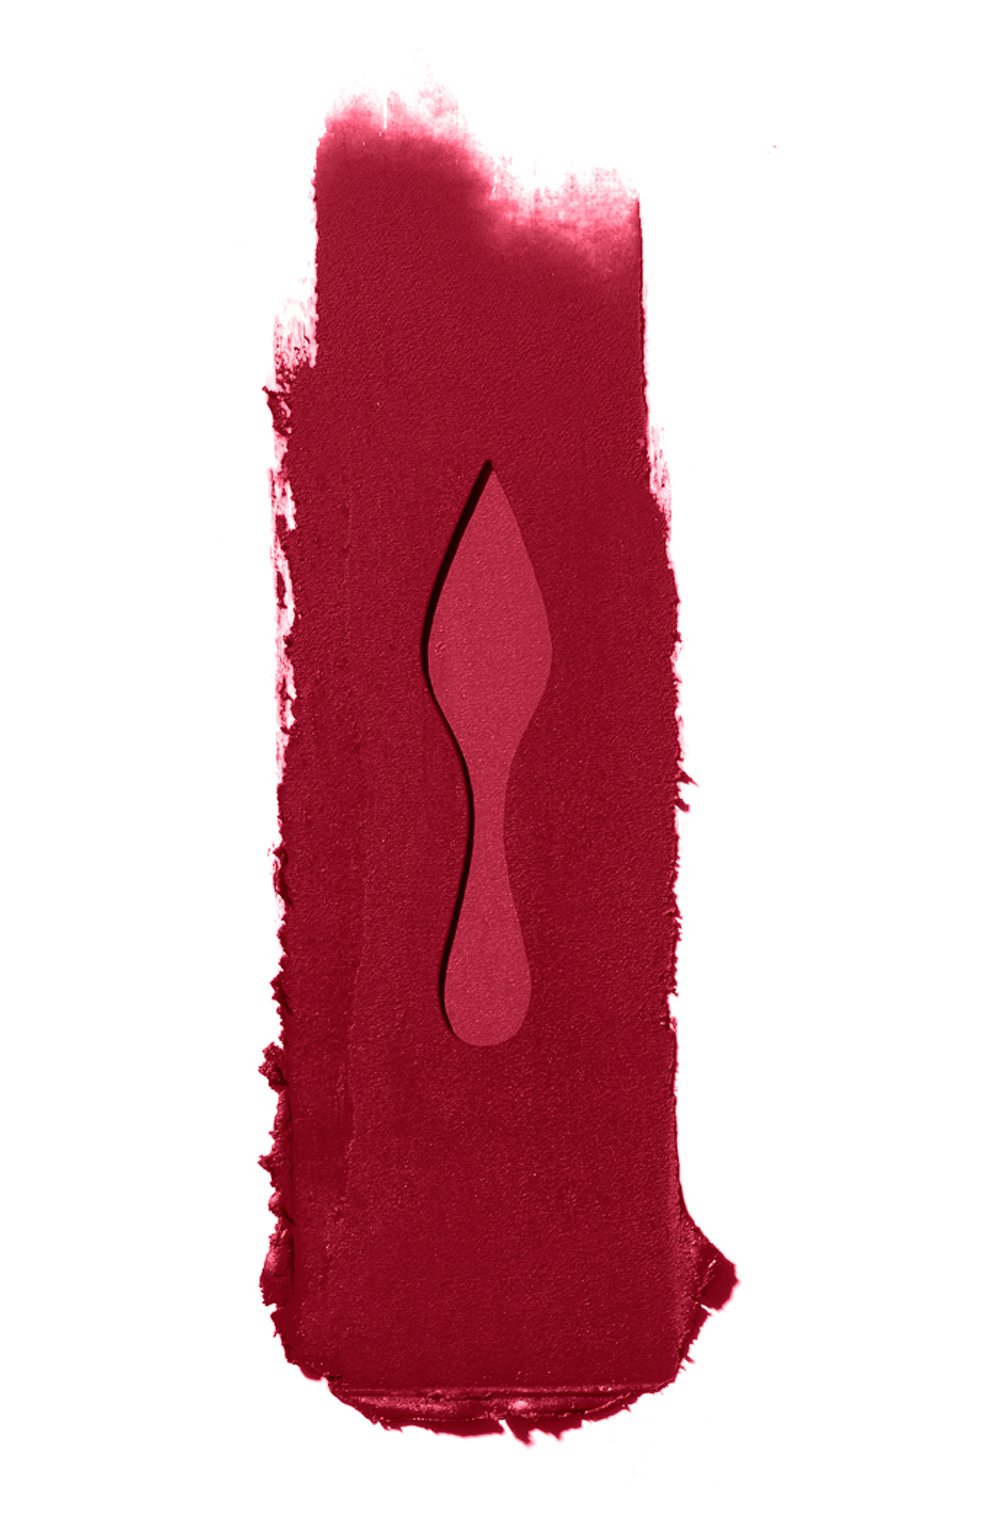 Матовая помада для губ rouge louboutin velvet matte on the go, оттенок jackie's wine CHRISTIAN LOUBOUTIN  цвета, арт. 8435415063357 | Фото 2 (Финишное покрытие: Матовый)